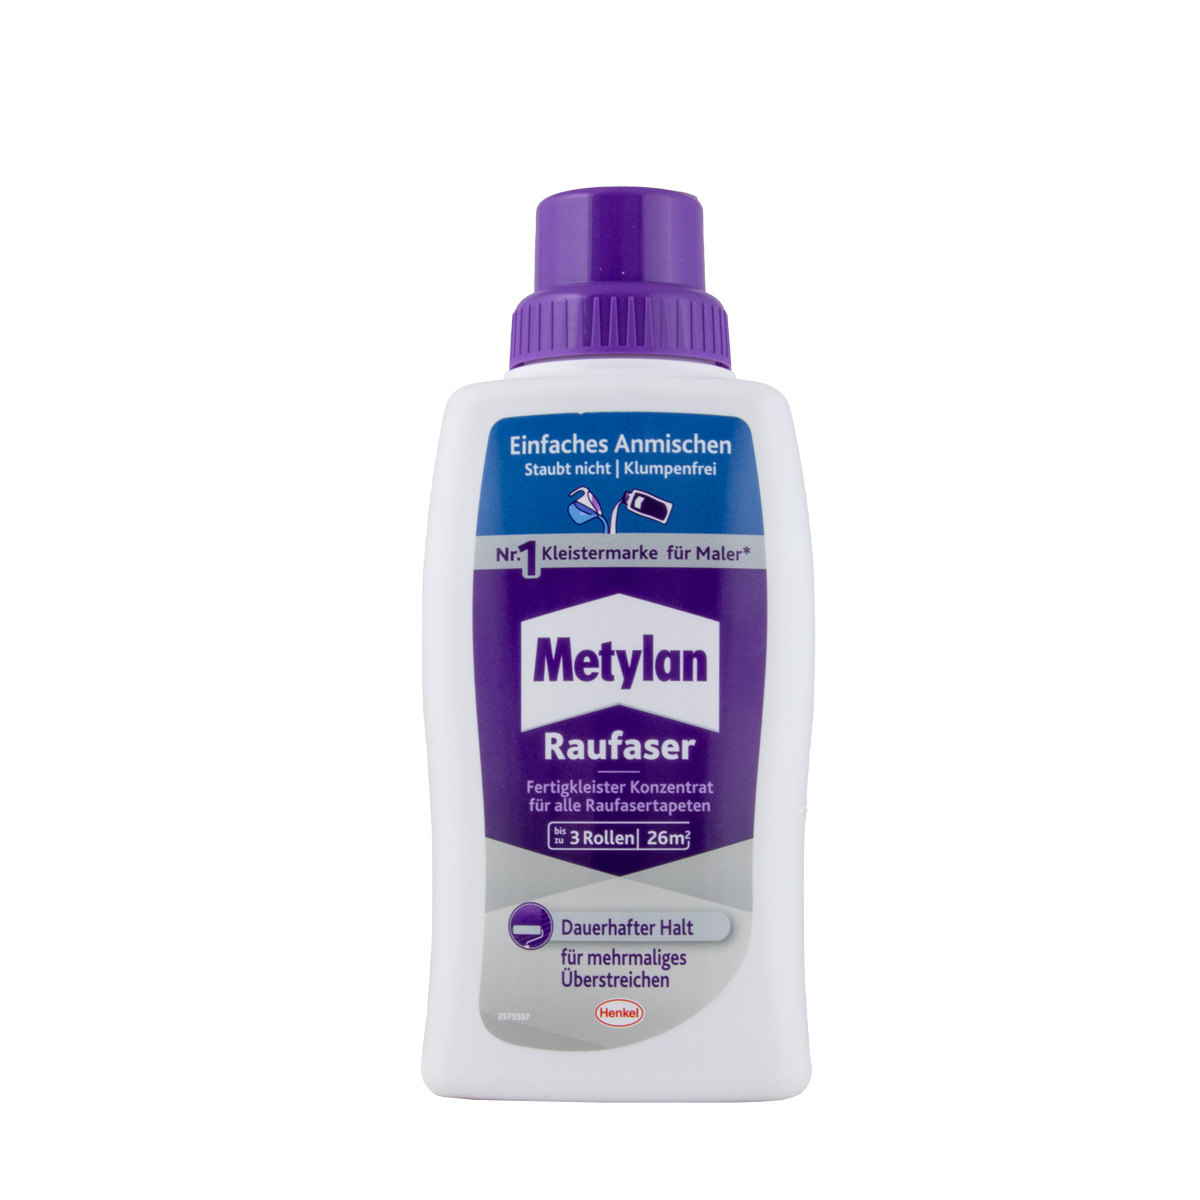 Metylan Produkte online | Farbklecks24 bestellen